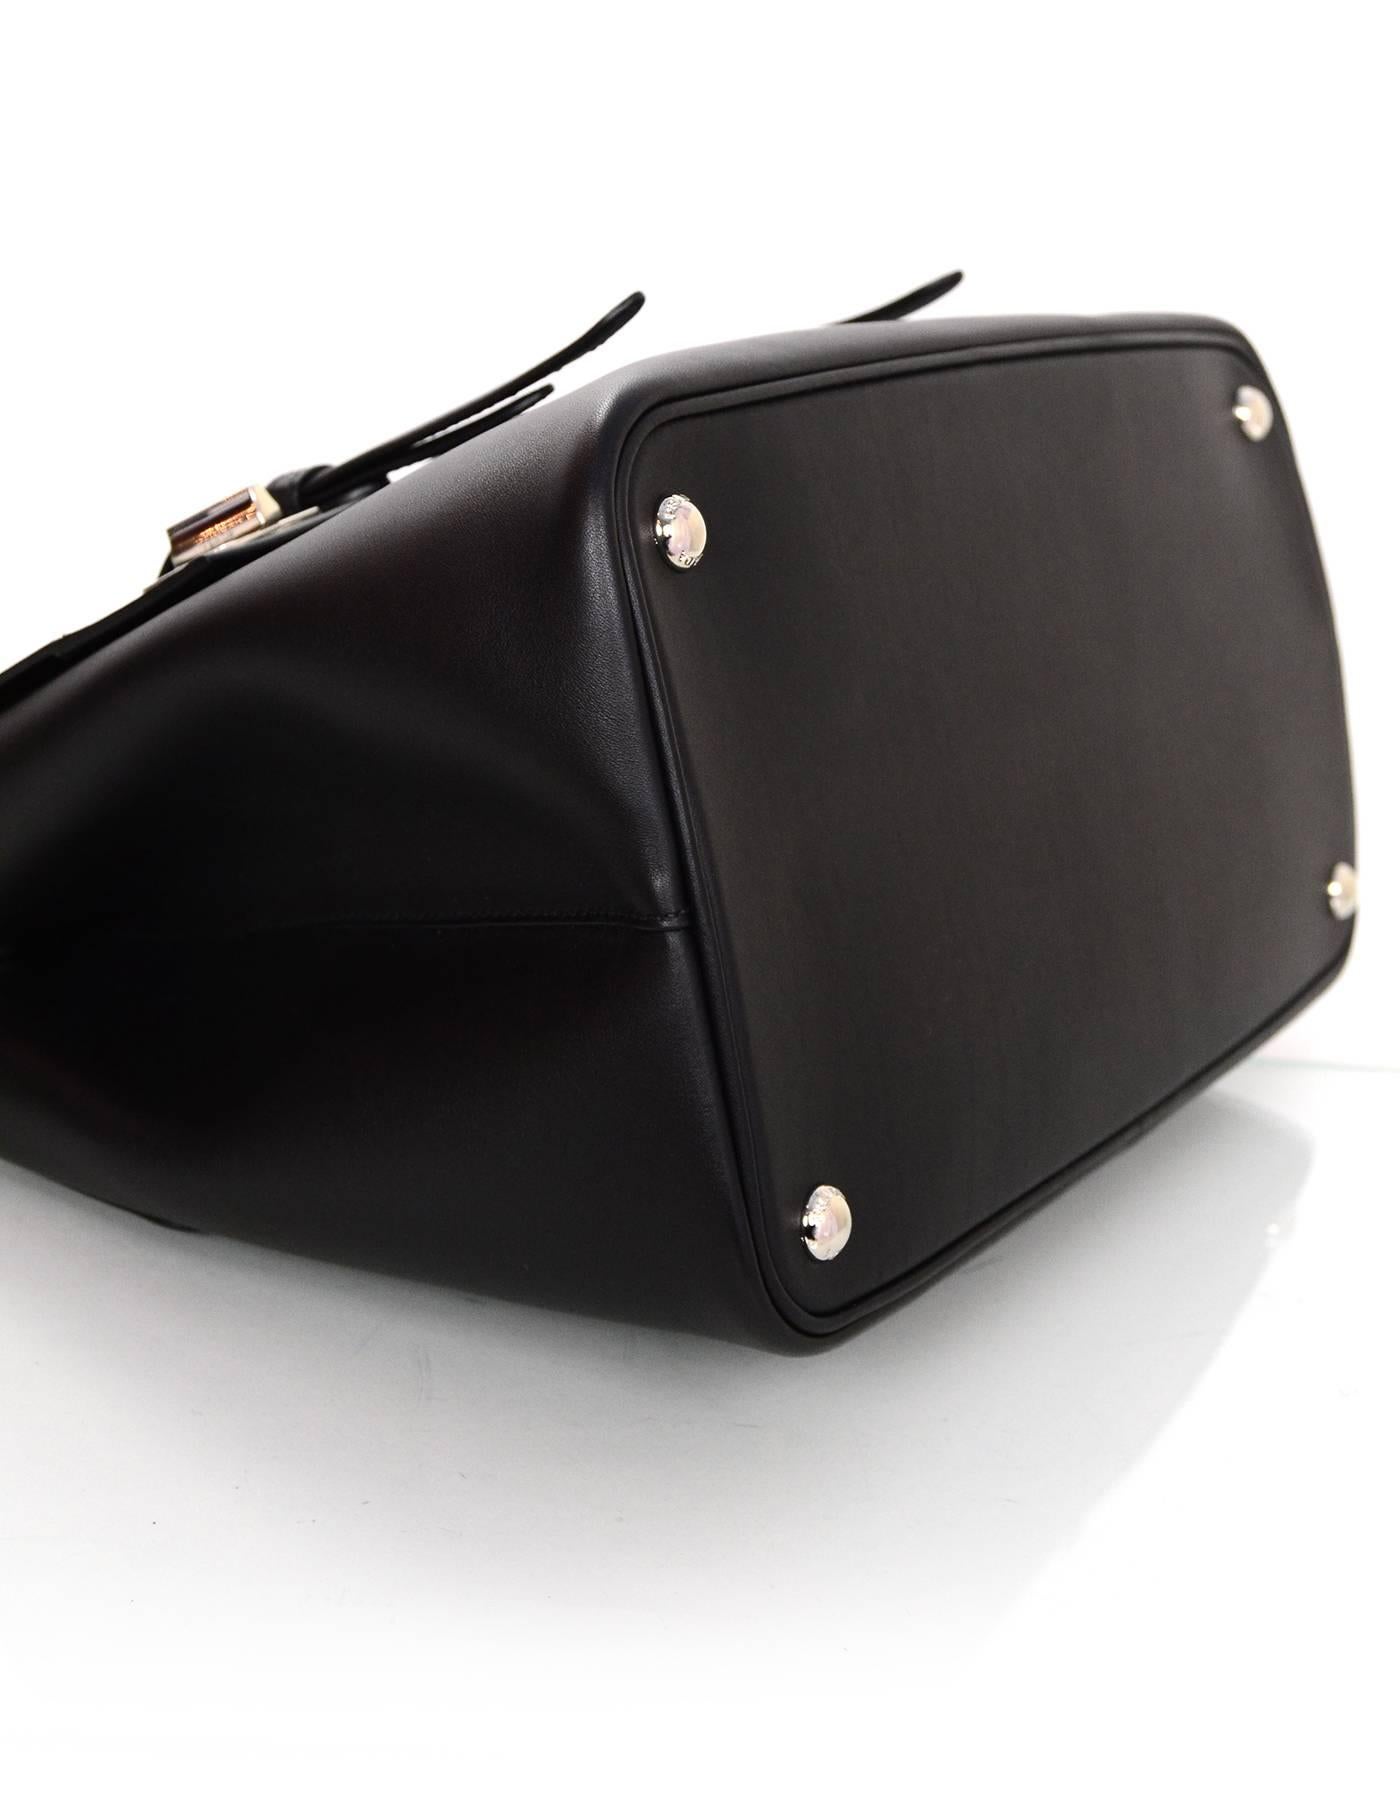 Prada Black Calf Leather Pattina City Satchel Bag w/ Optional Strap  2